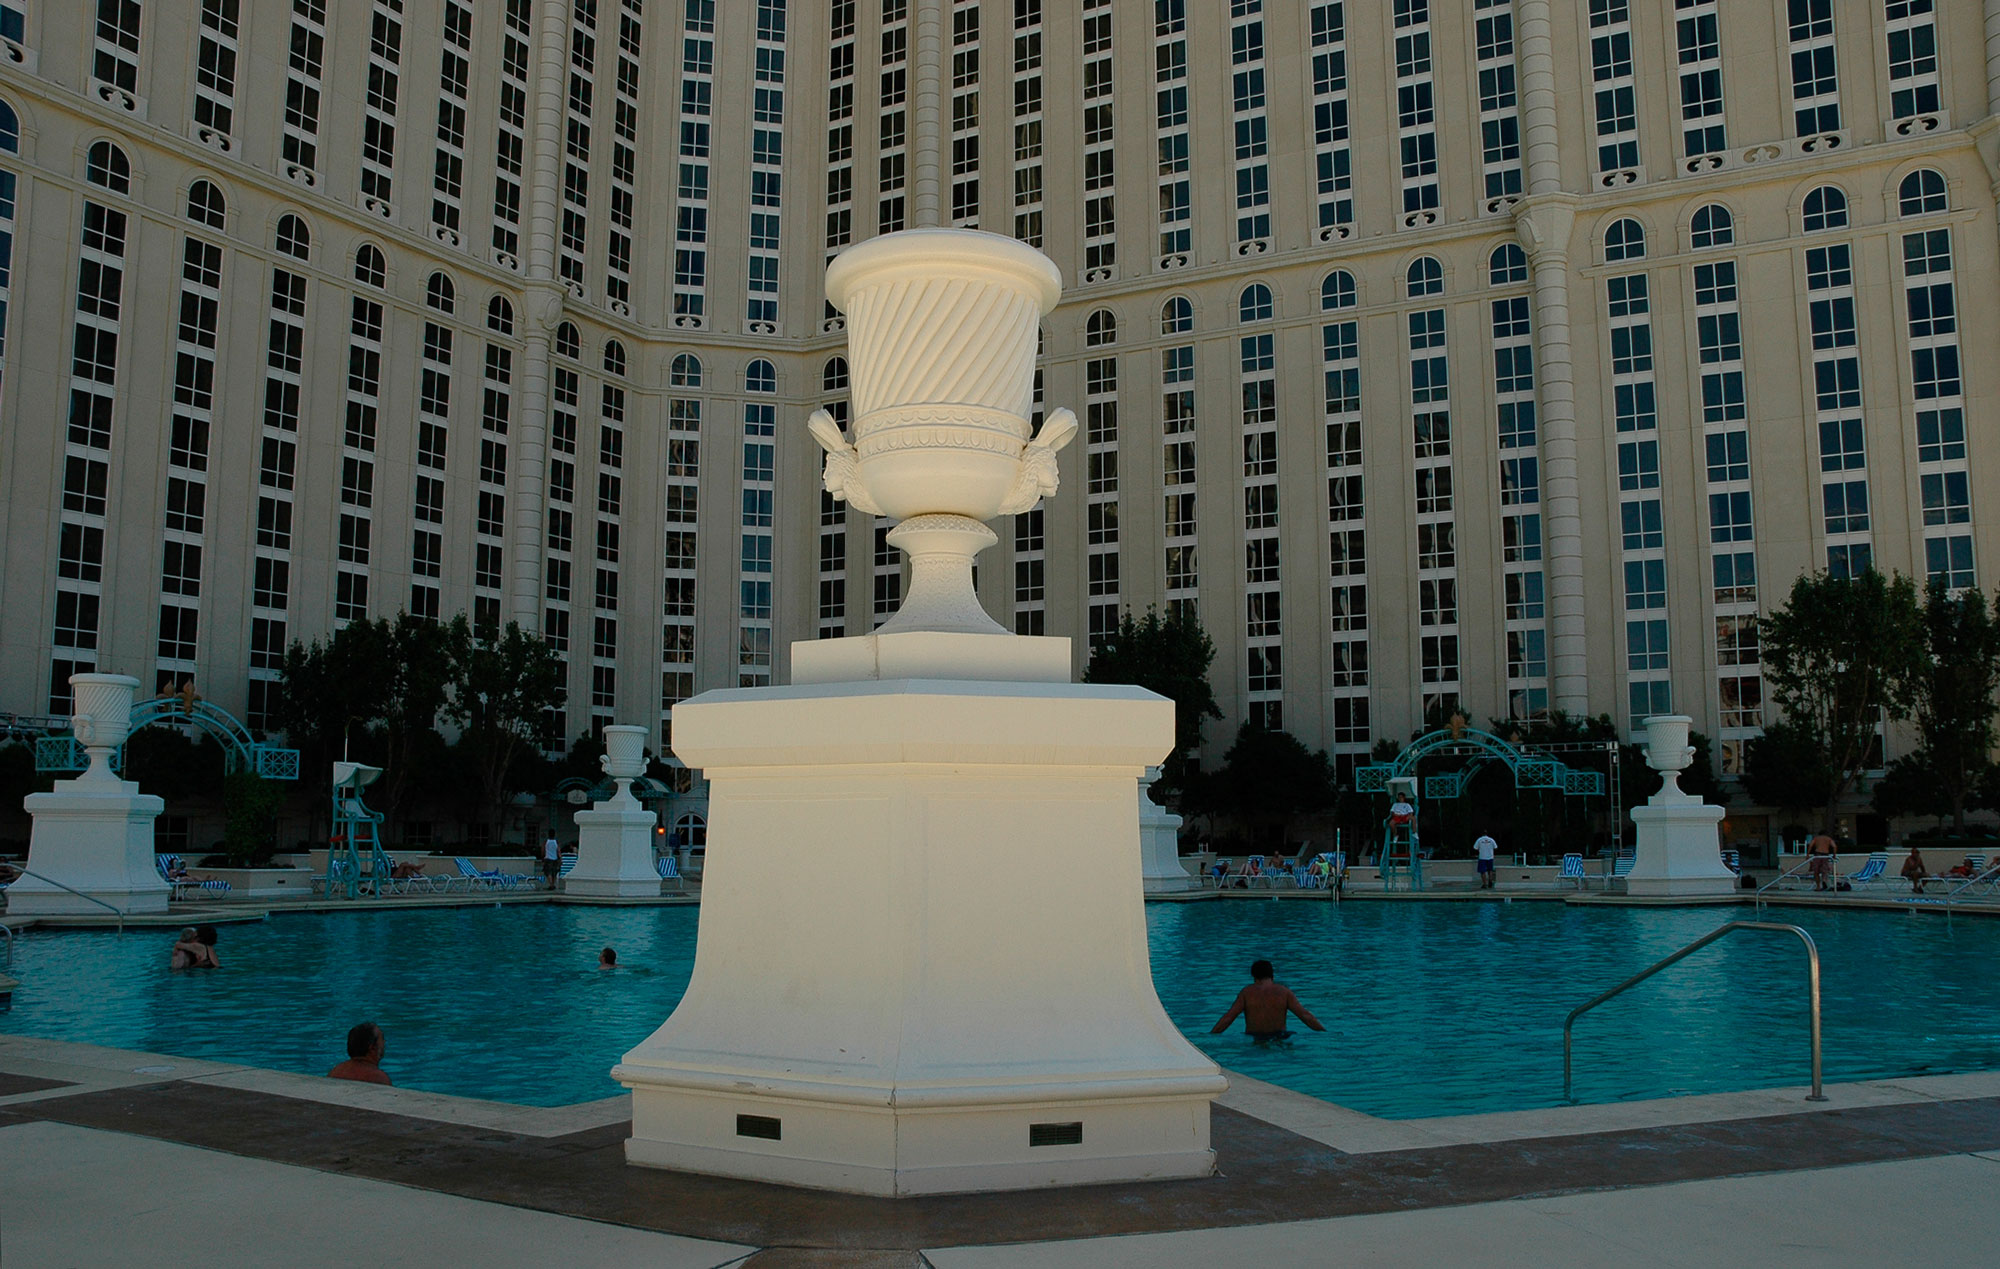 Bellagio Hotel, Las Vegas photograph by Benoit Malphettes